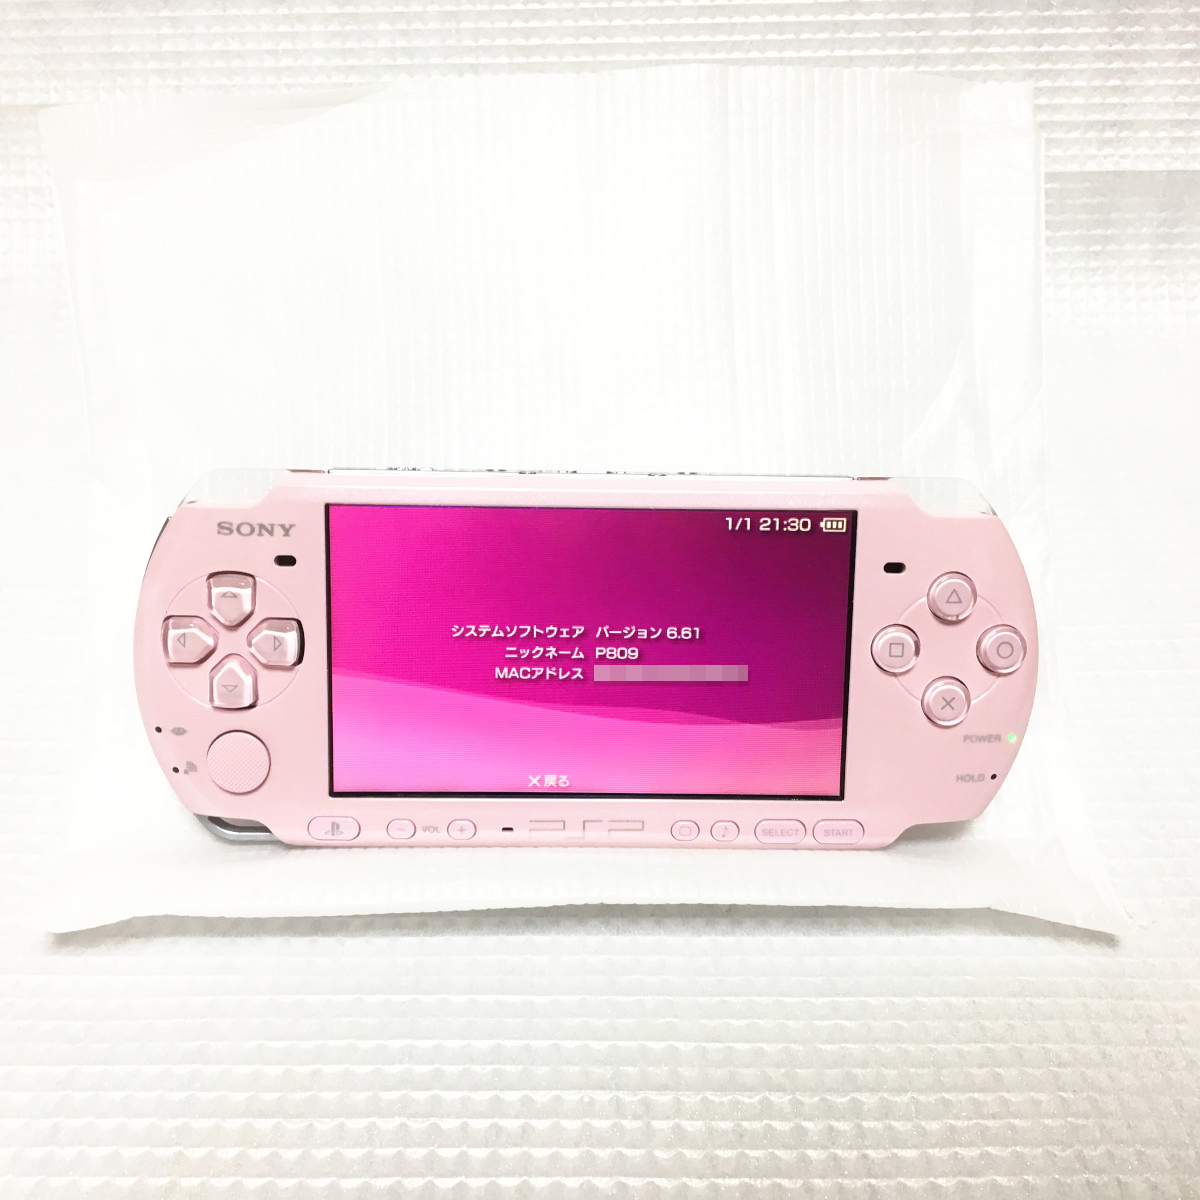  SONY PSP 3000 本体 ブロッサム・ピンク PSP-3000ZP 箱 説明書付 完品 希少 美品 未使用に近い プレイステーションポータブル  PSP-3000